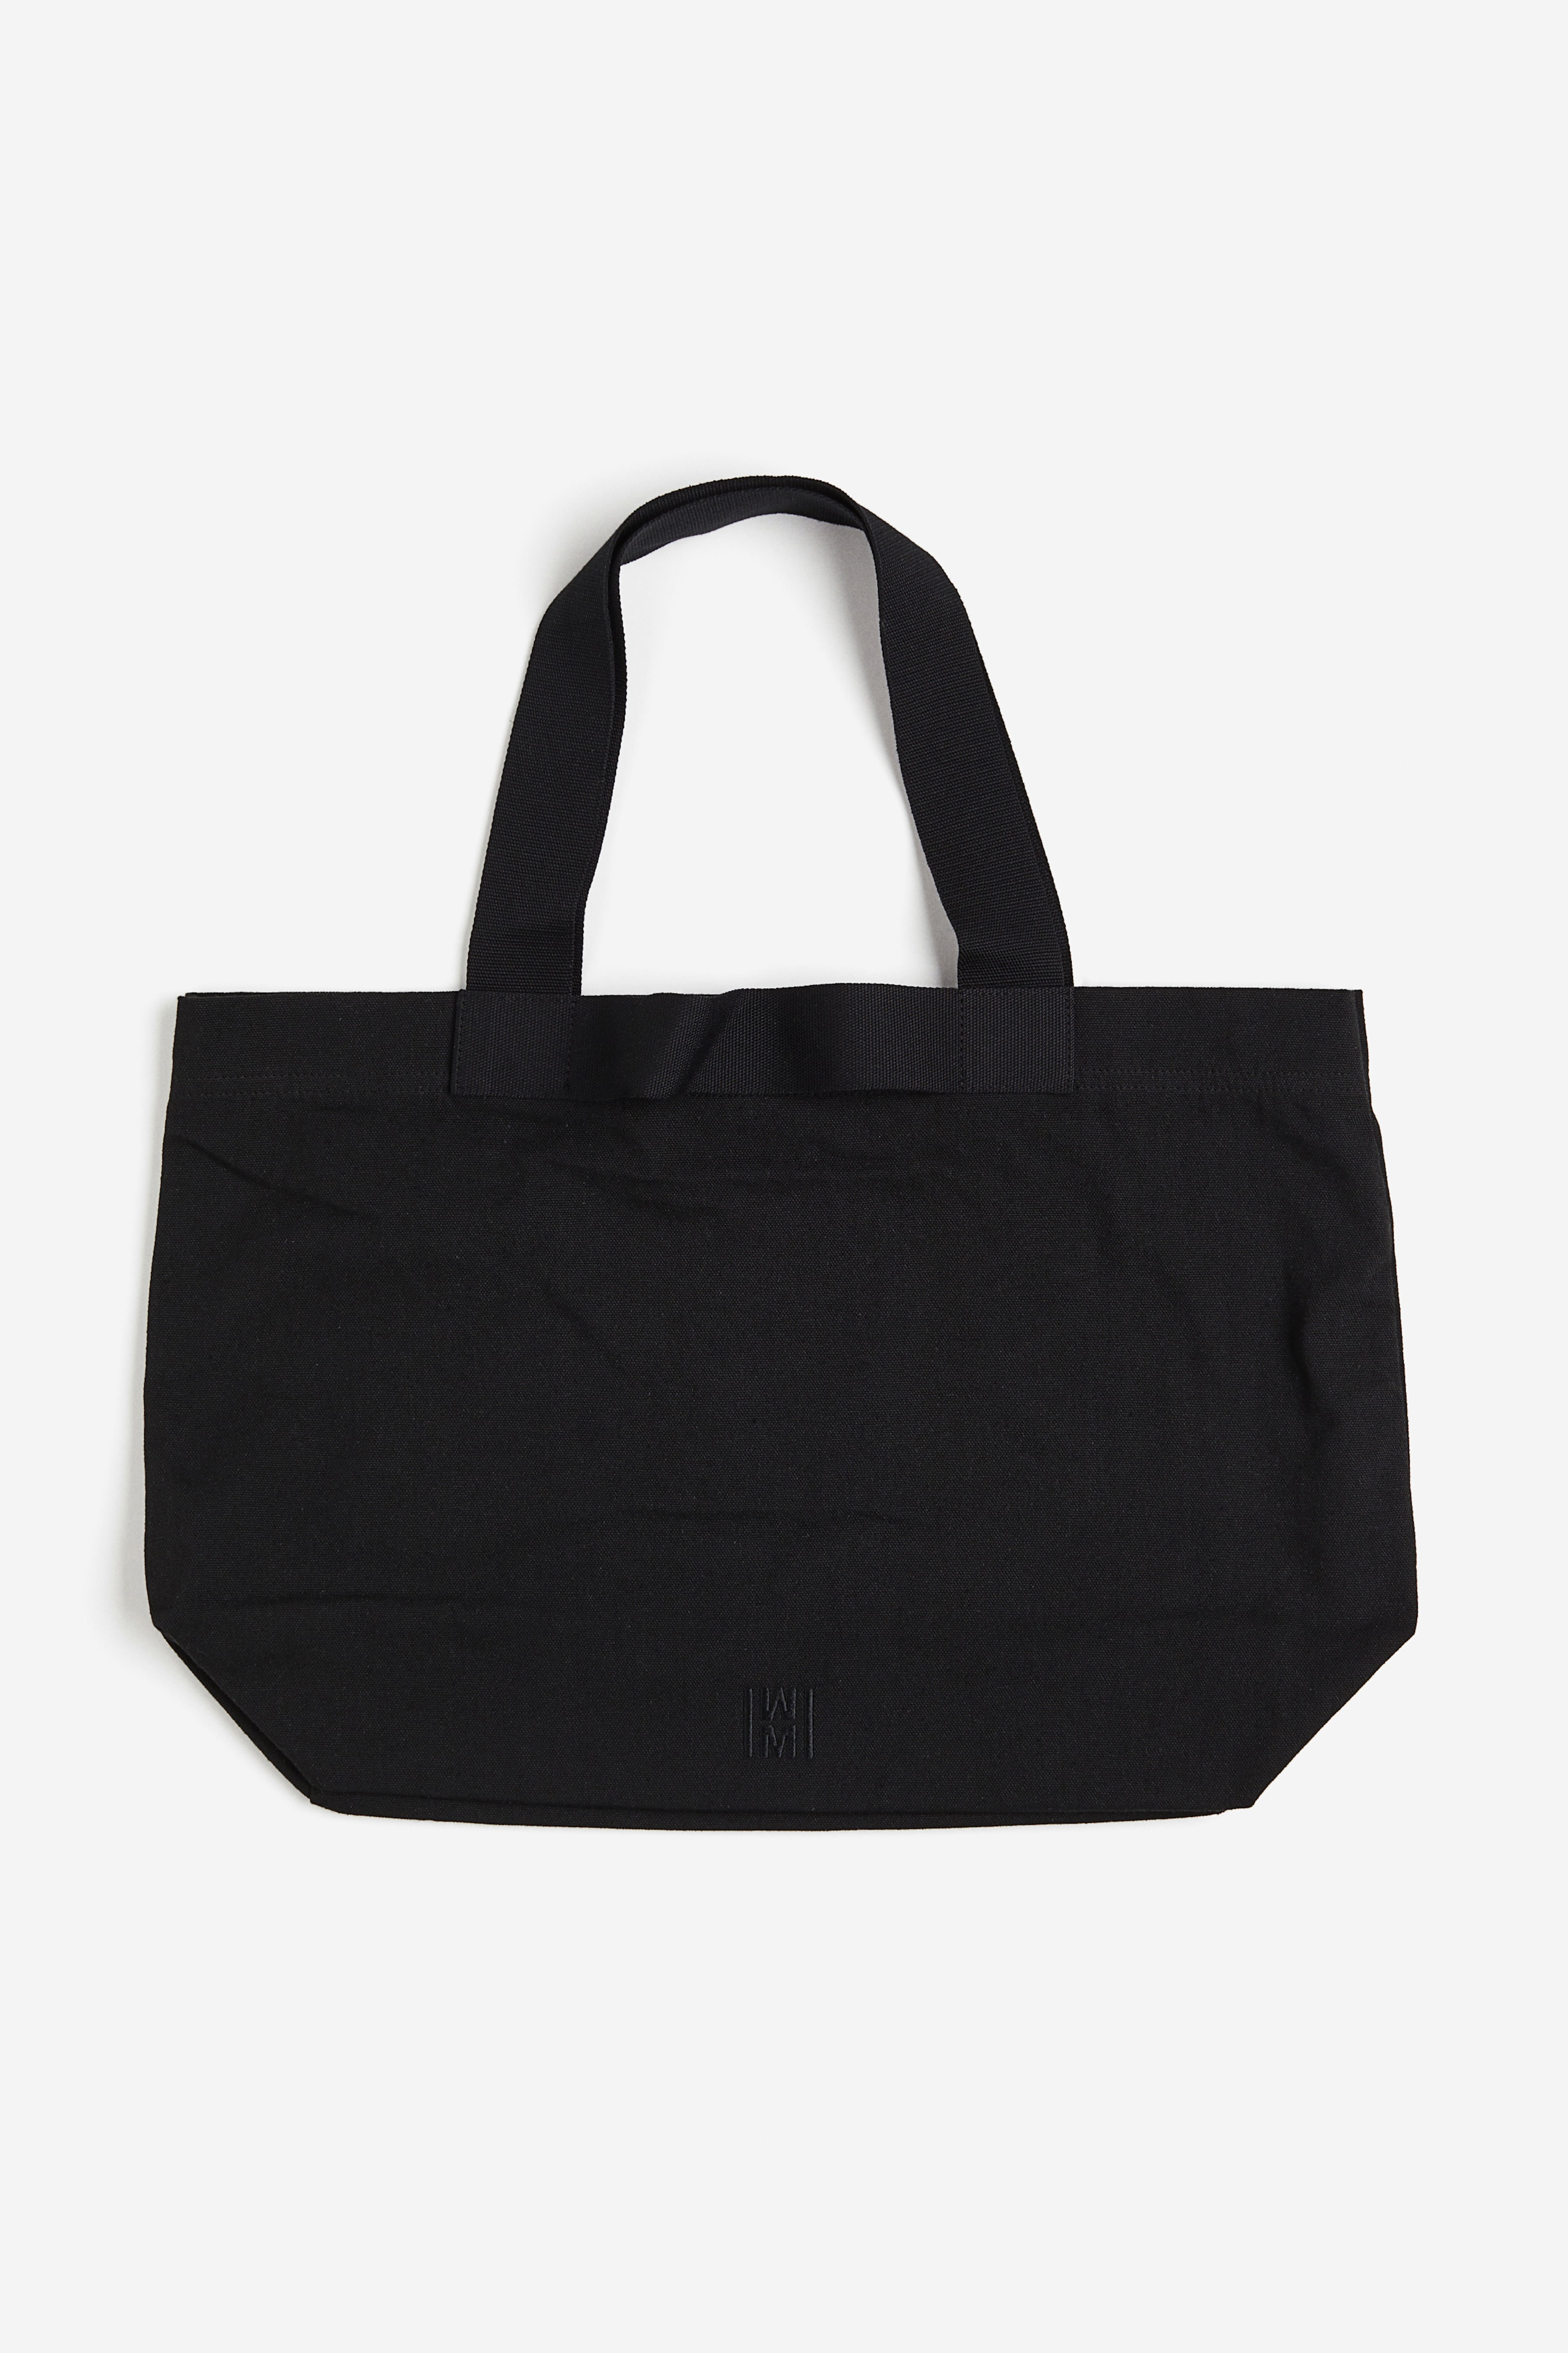 Bags for Women | Shoulder, Totes & Crossbody Bags | H&M GB